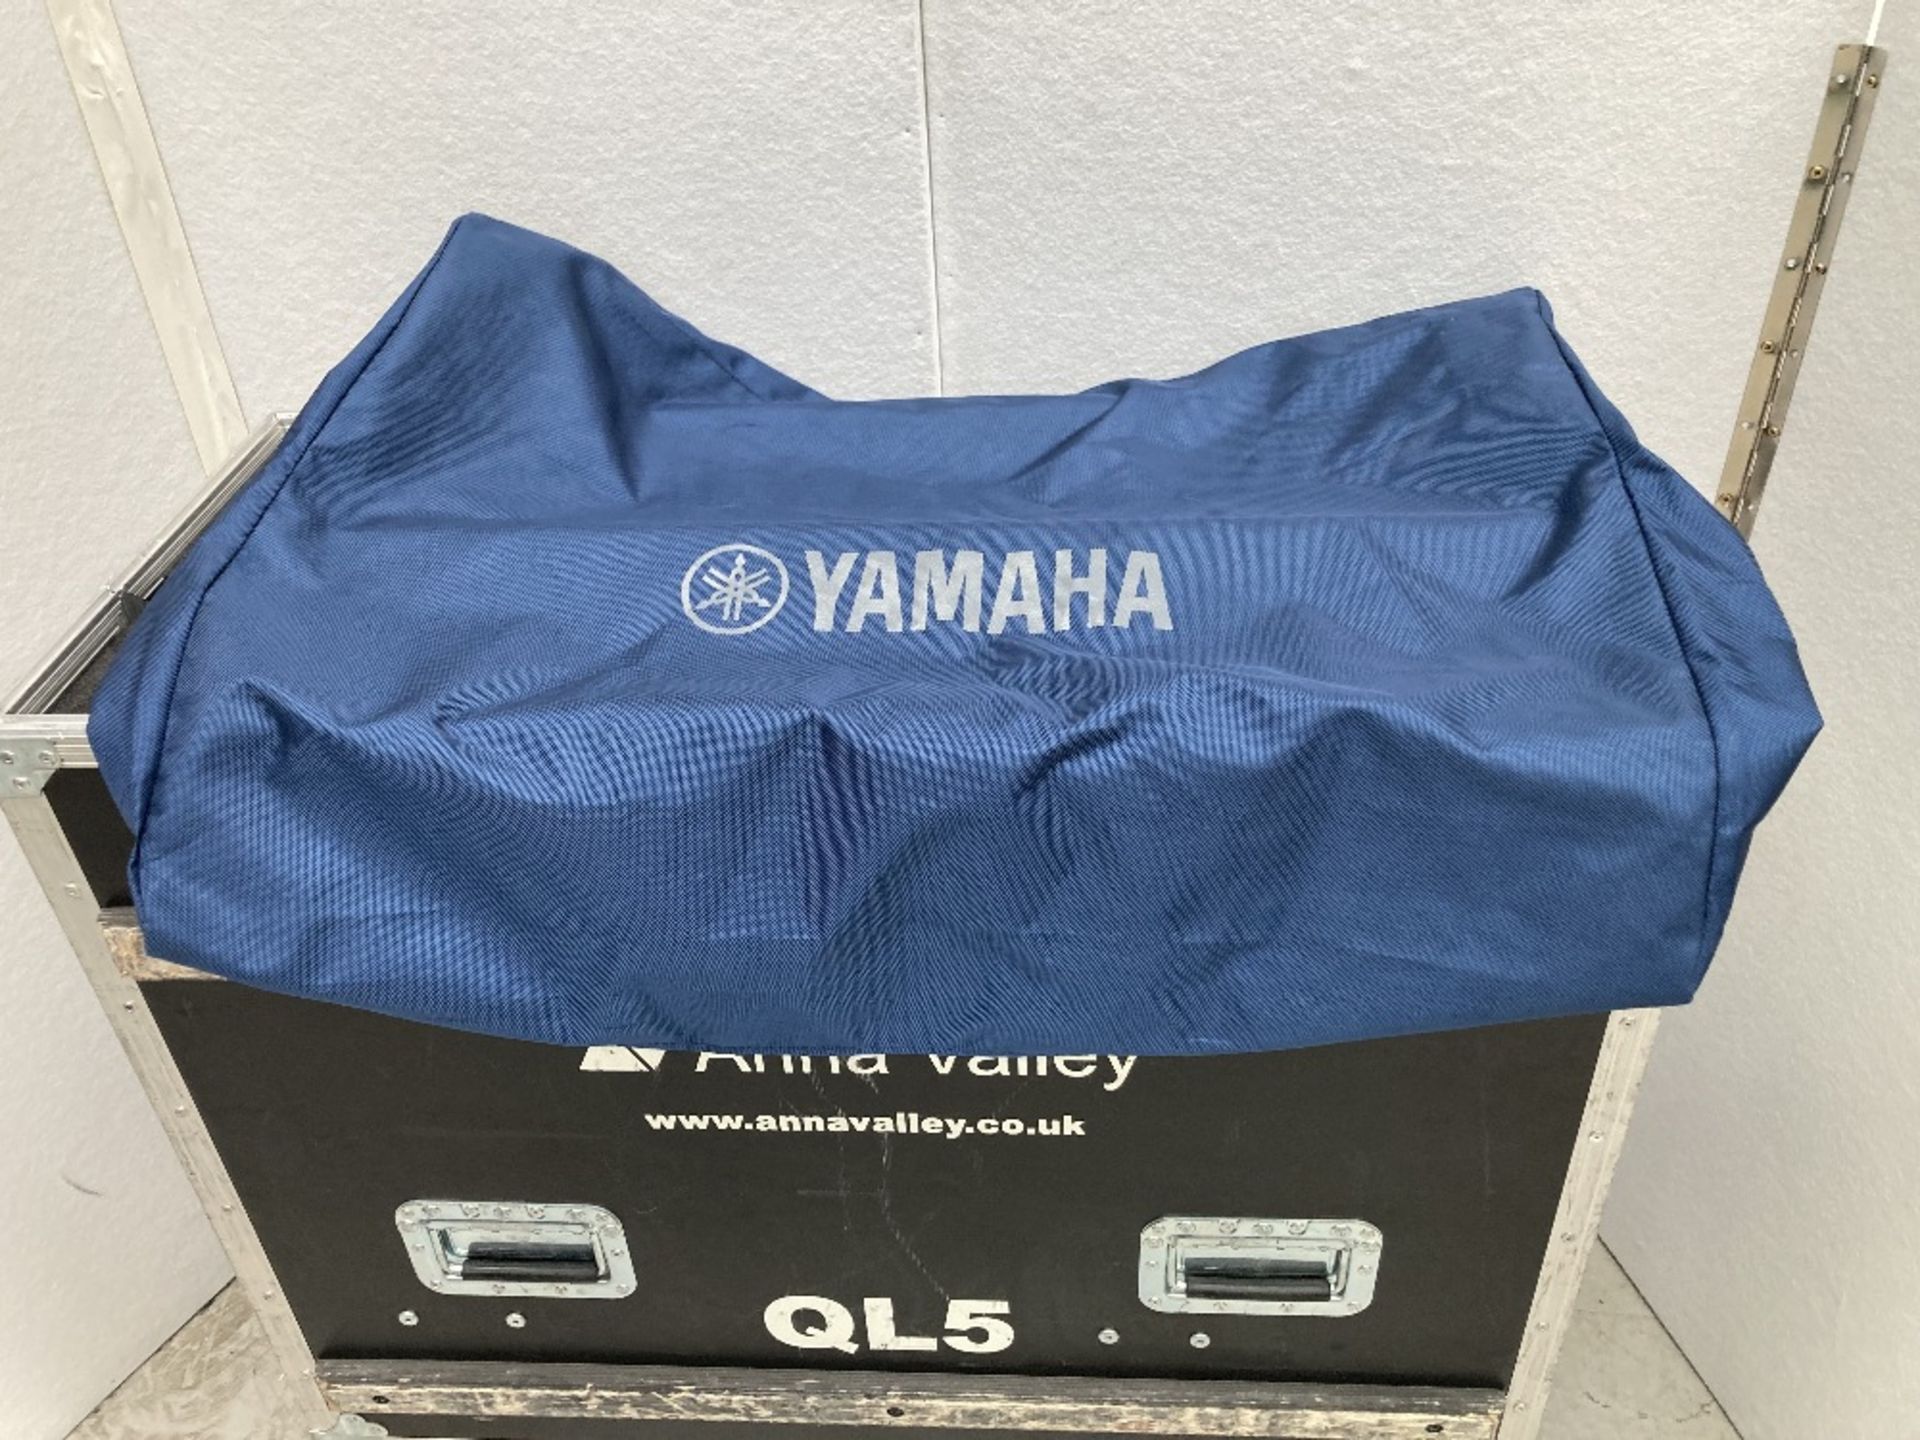 Yamaha QL5 Digital Mixing Console & Heavy Duty Mobile Flight Case - Image 15 of 16